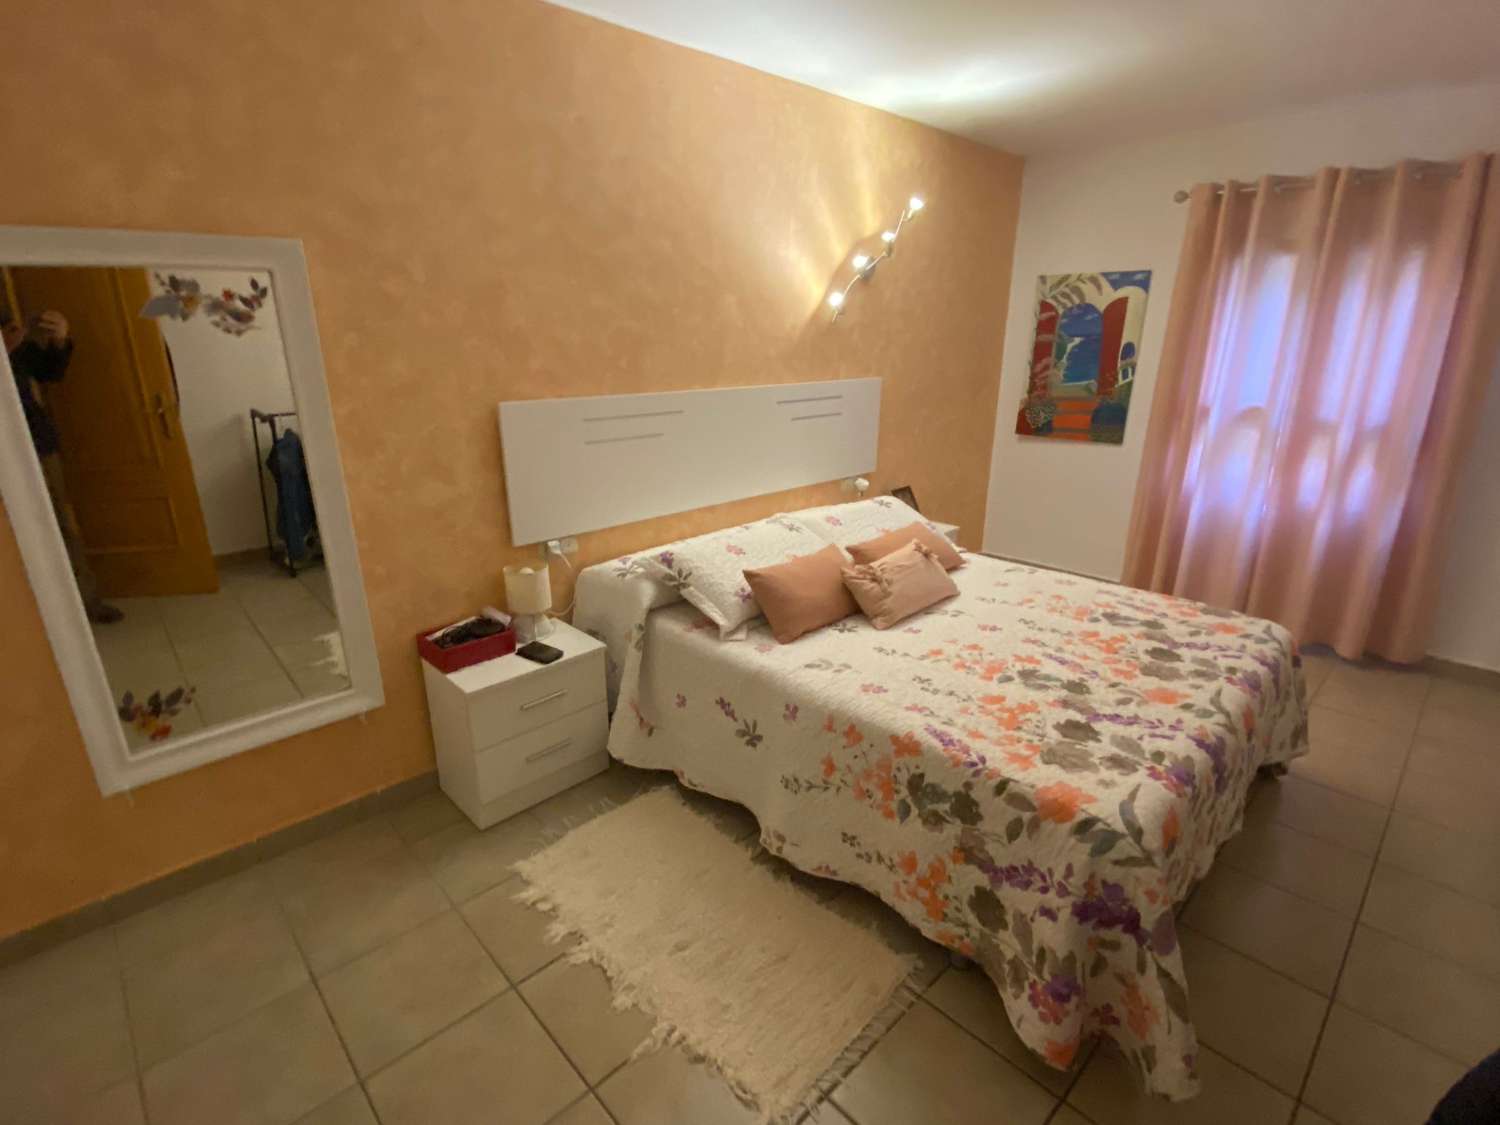 Se vende piso de 3 dormitorios, centro de Fuengirola.